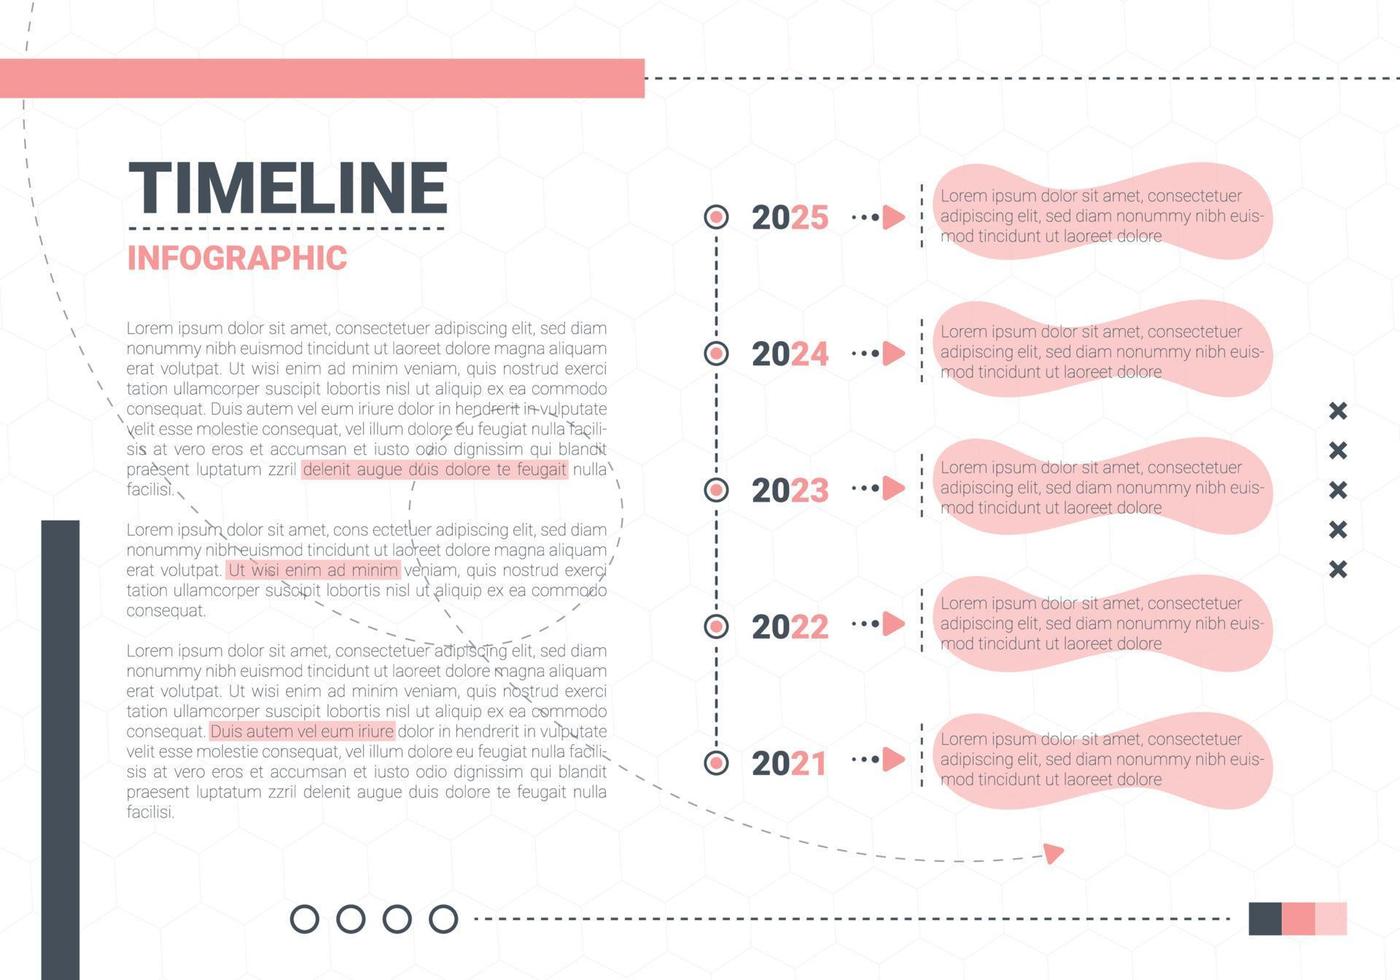 tidslinje infographic 2021-2025 års perioder. - vektor infographic mall